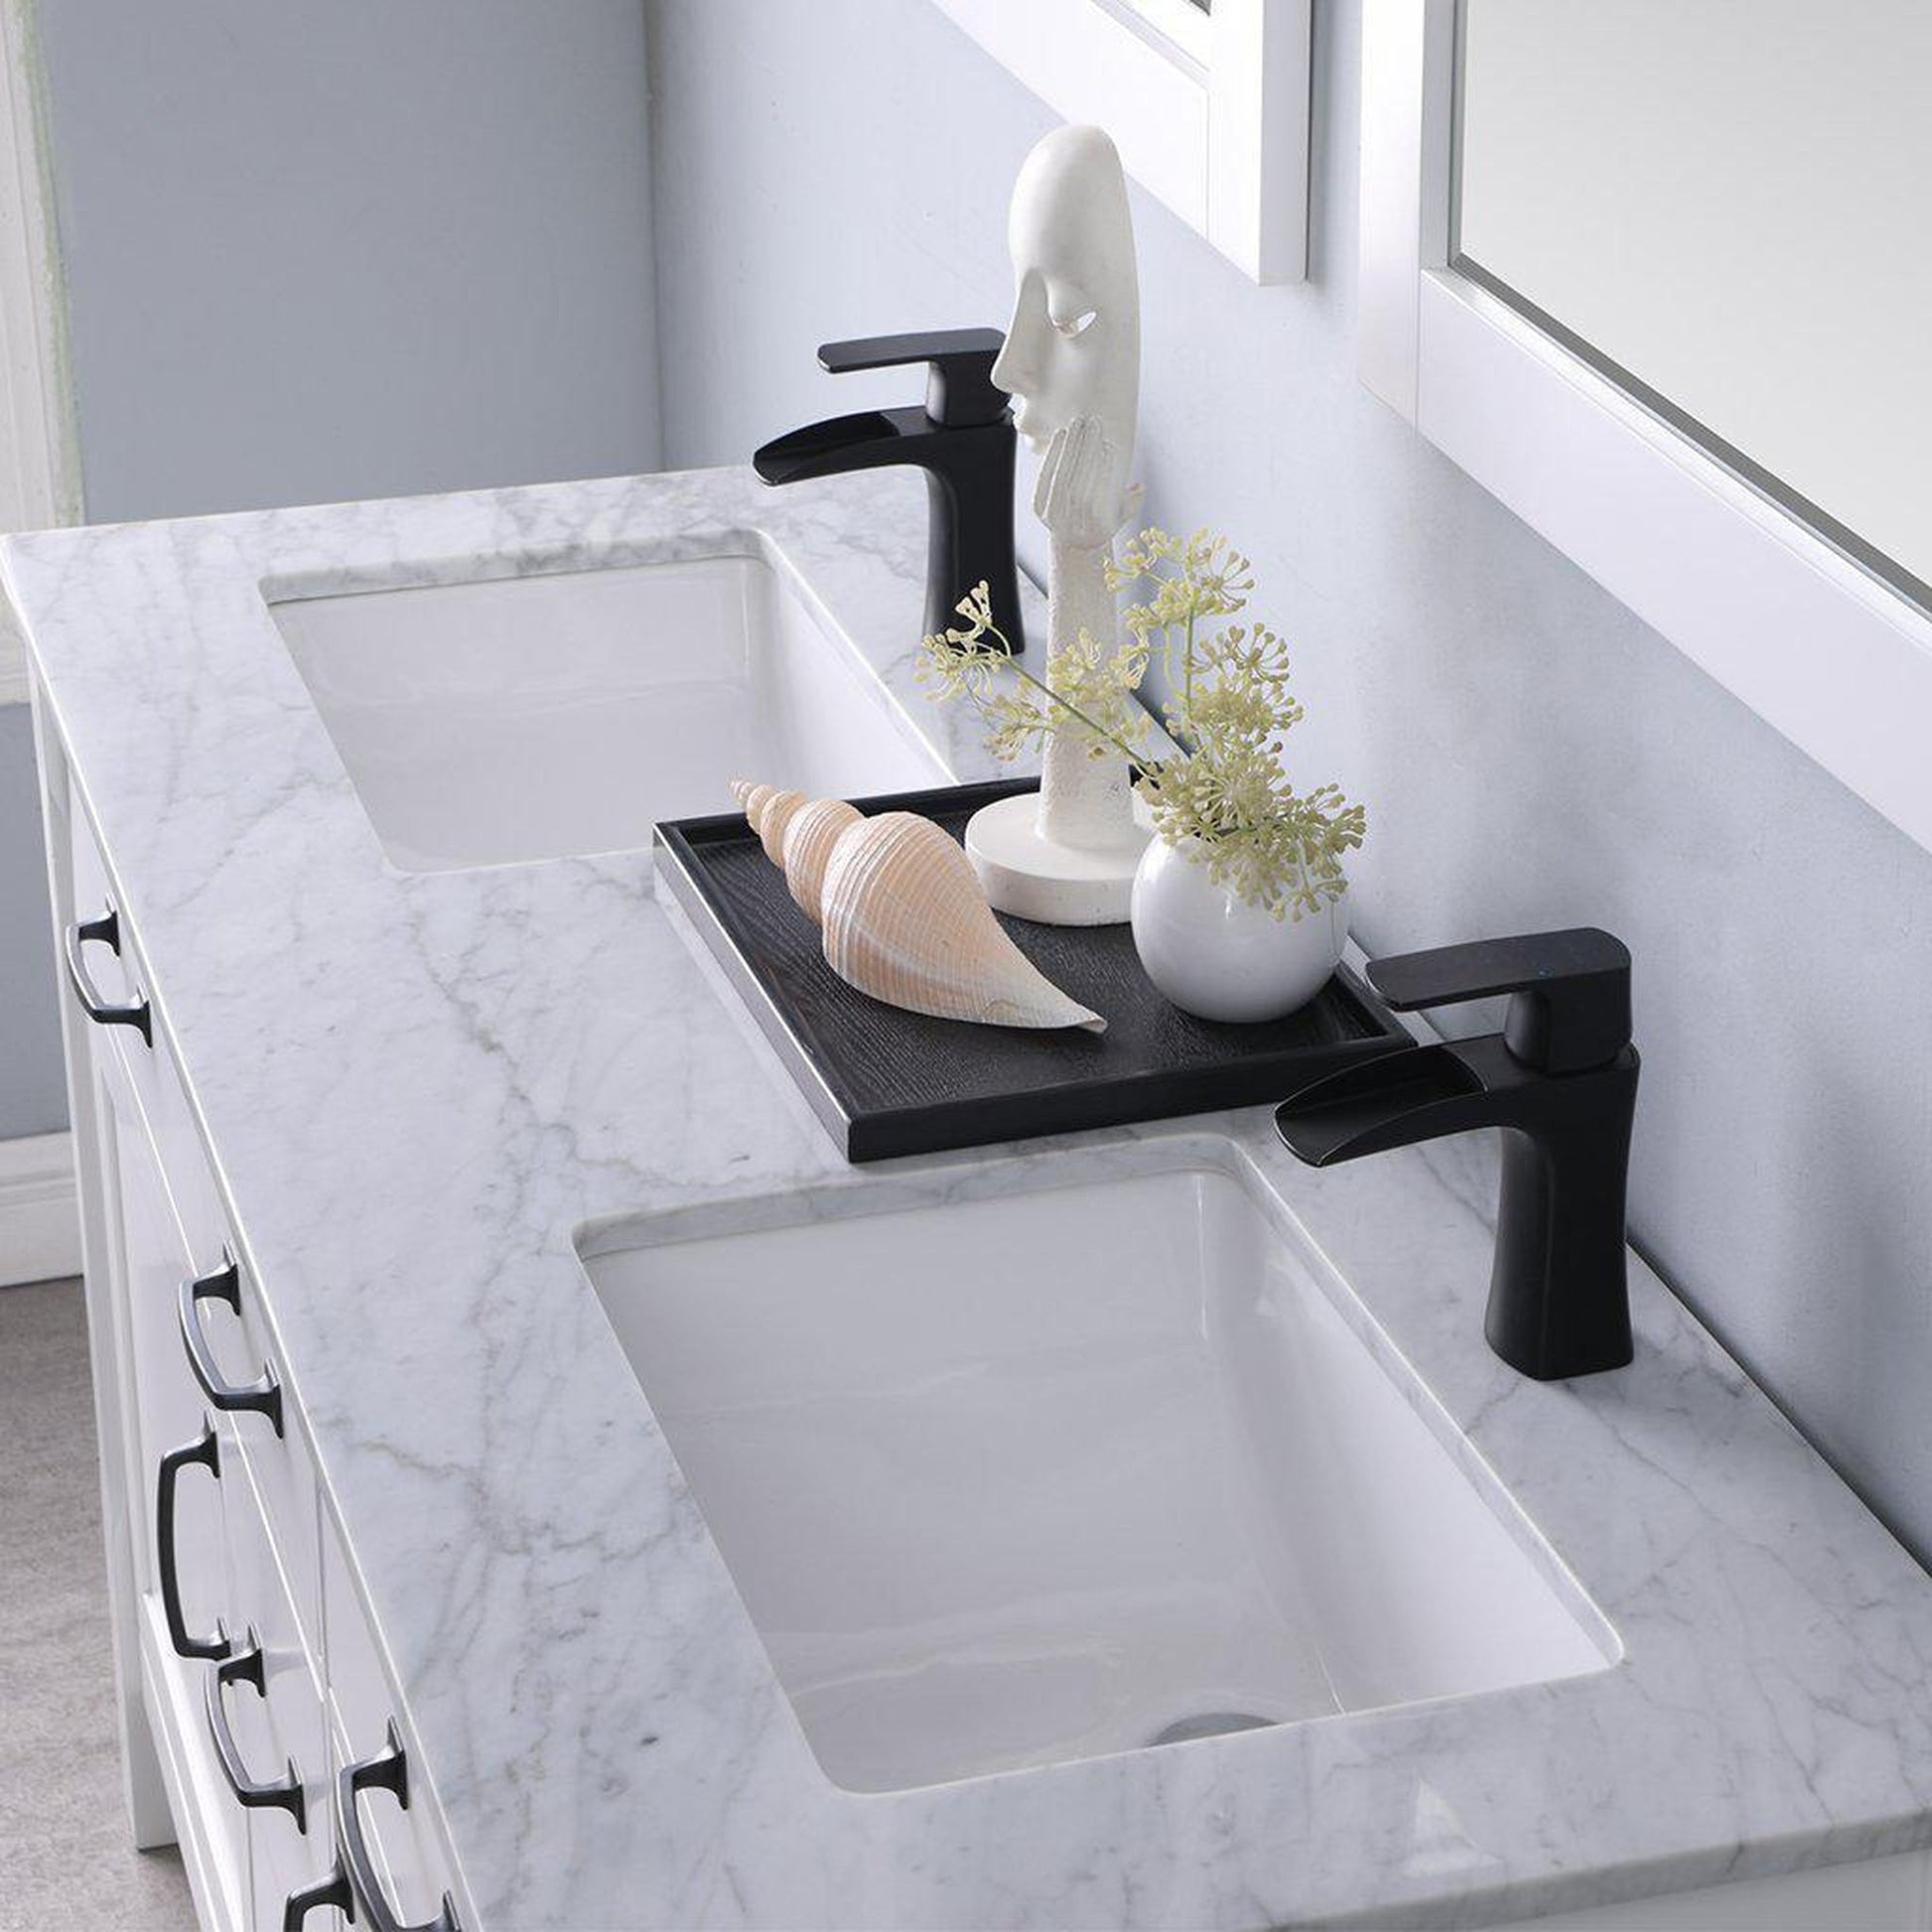 Altair Maribella 60" Double White Freestanding Bathroom Vanity Set With Mirror, Natural Carrara White Marble Top, Rectangular Undermount Ceramic Sink, and Overflow